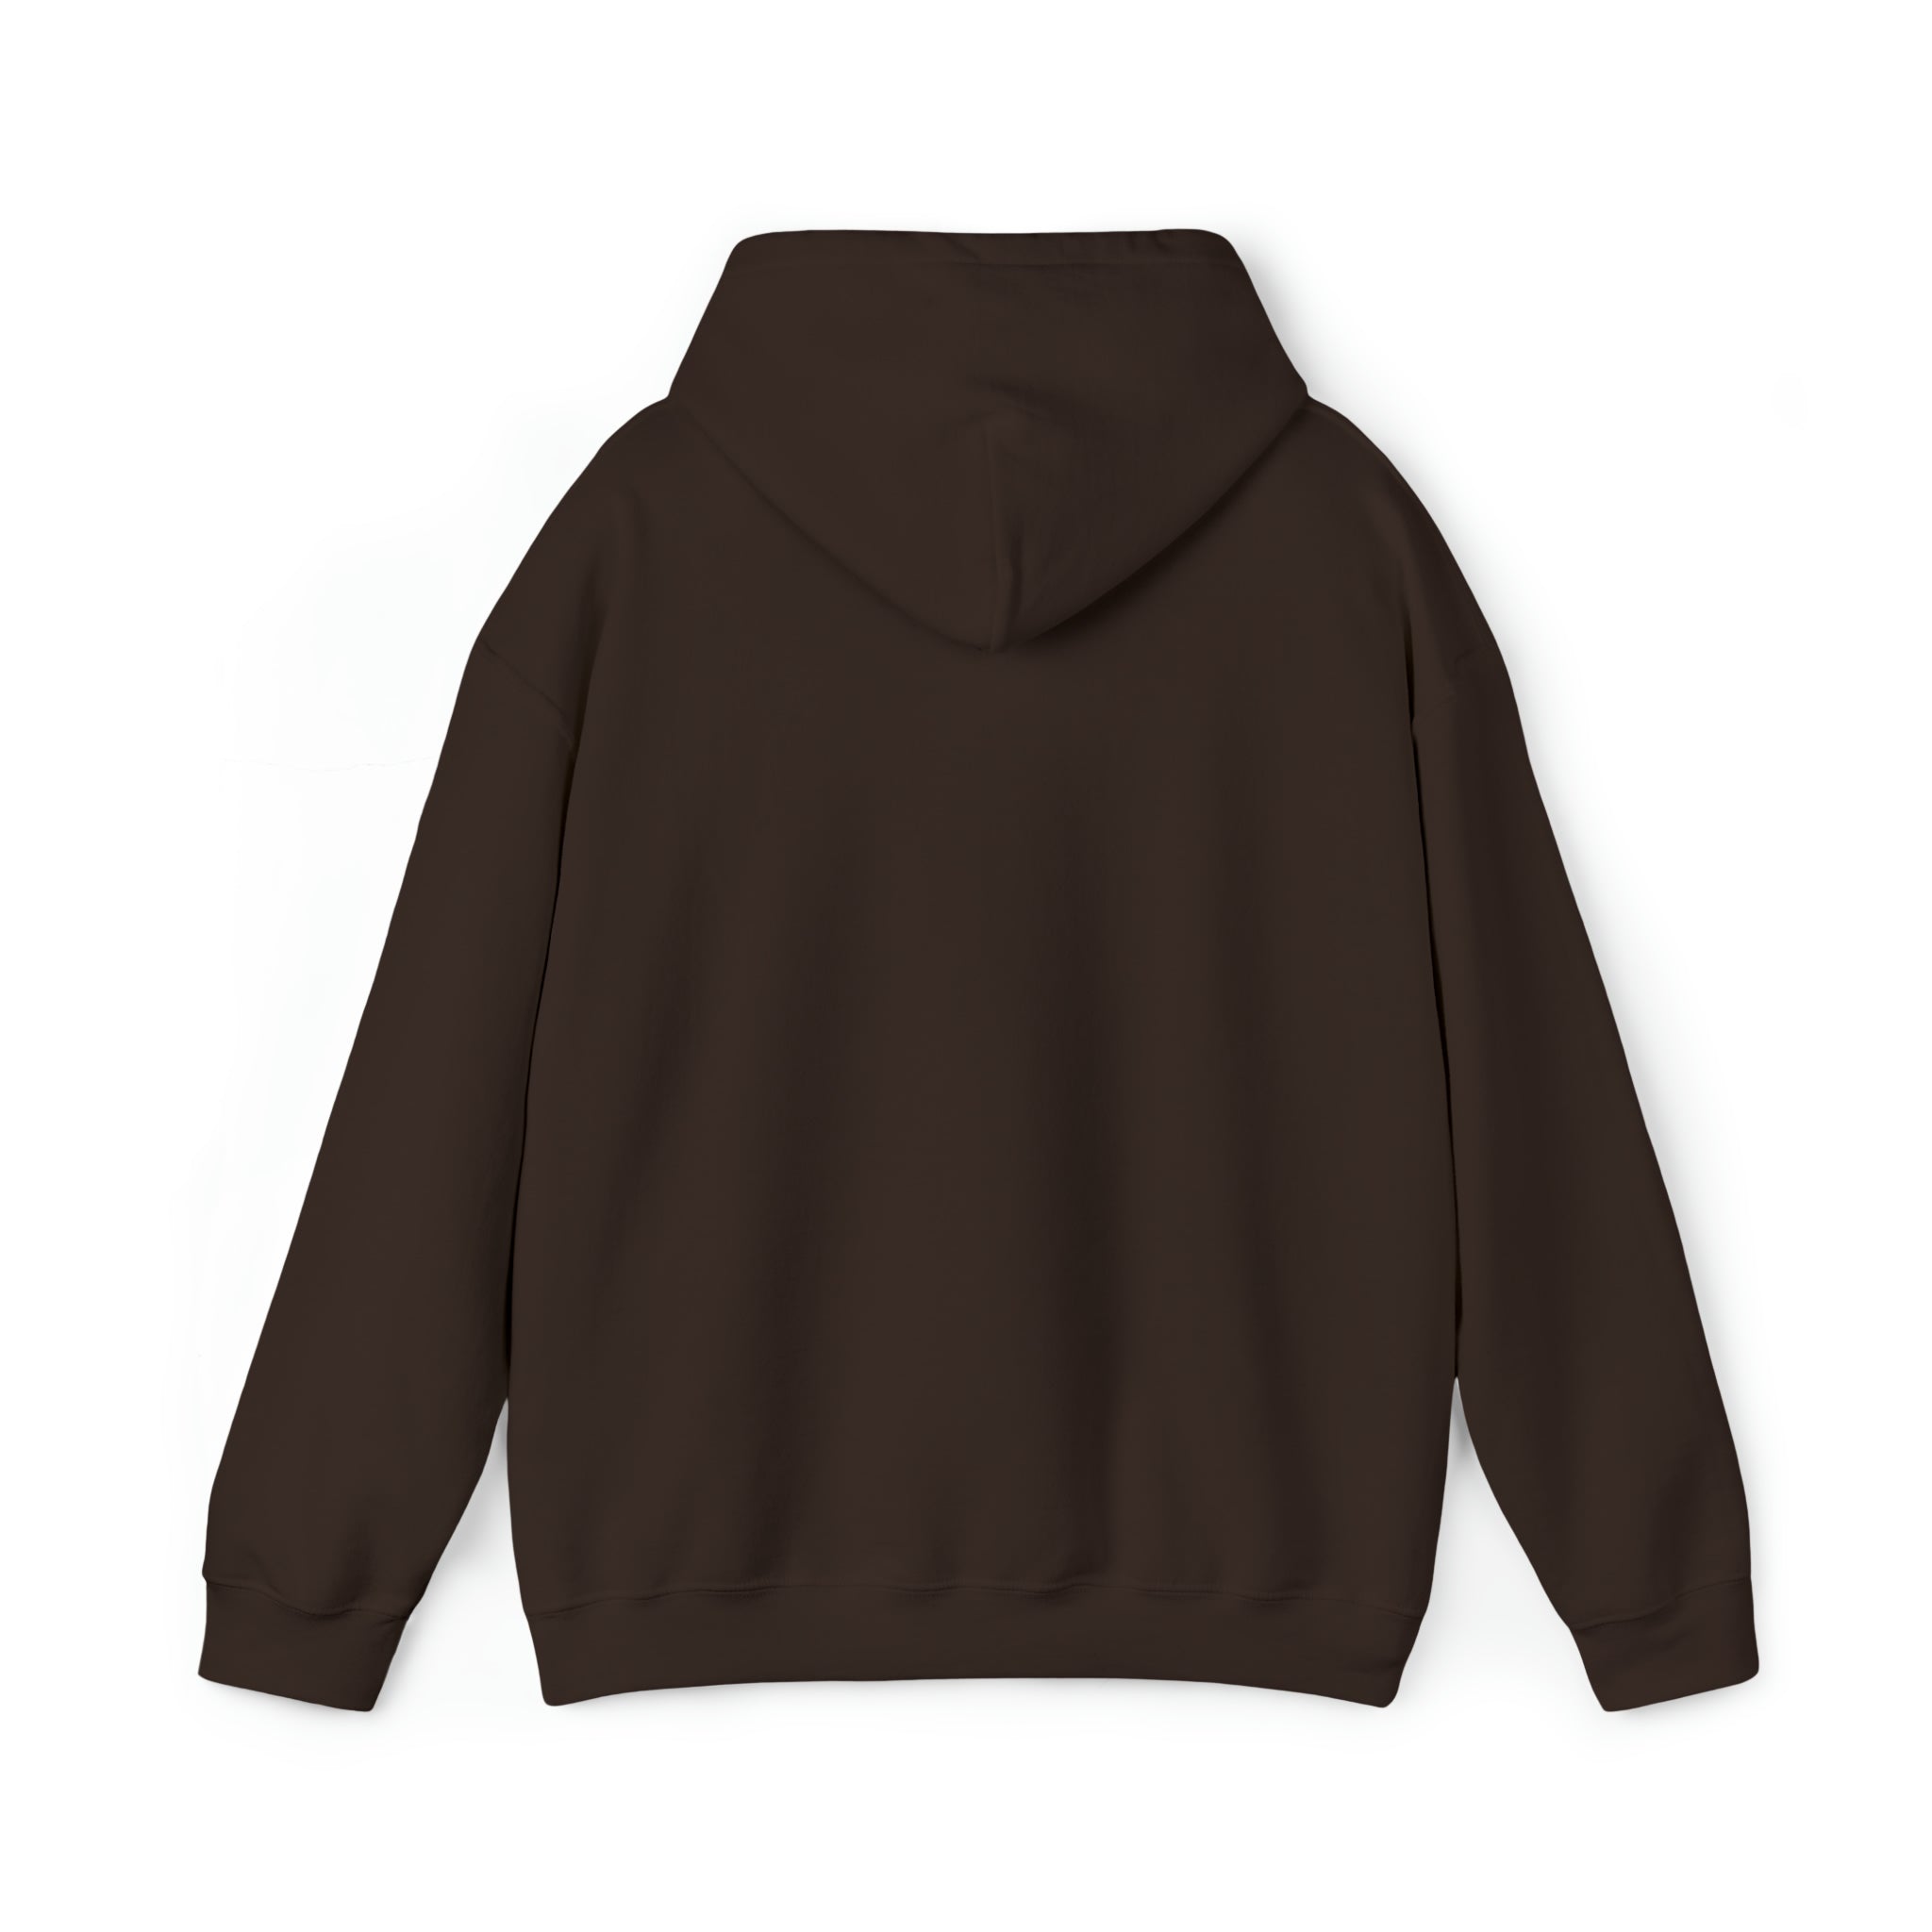 Mettaverse Logo - Unisex Heavy Blend™ Hooded Sweatshirt